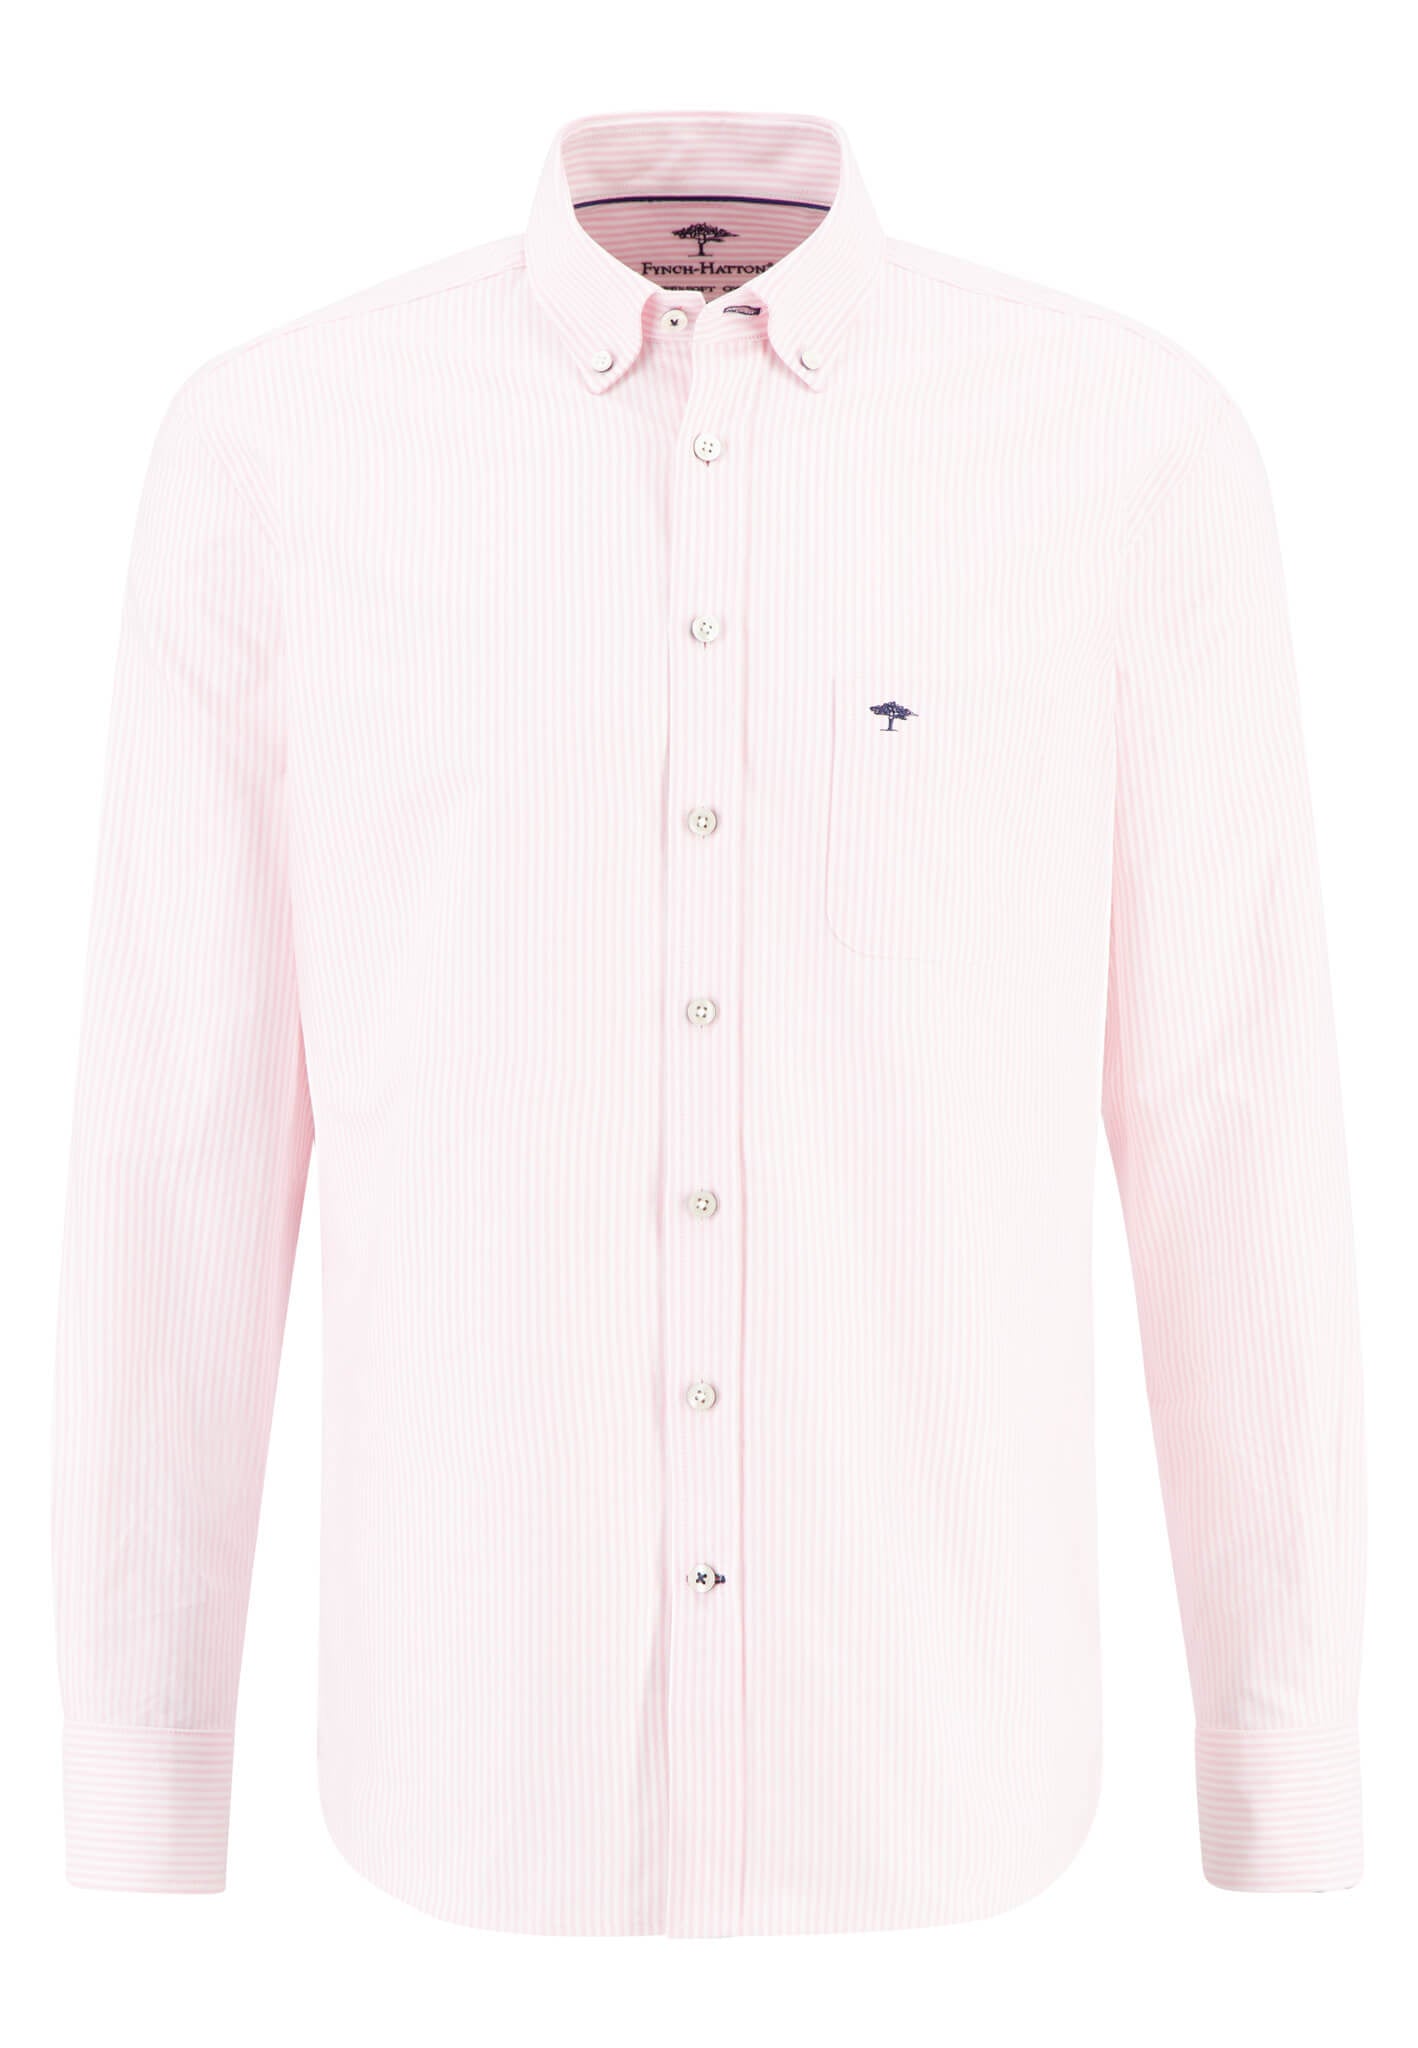 Fynch Hatton, the All Season Oxford Shirt, Long Sleeve, Button Down